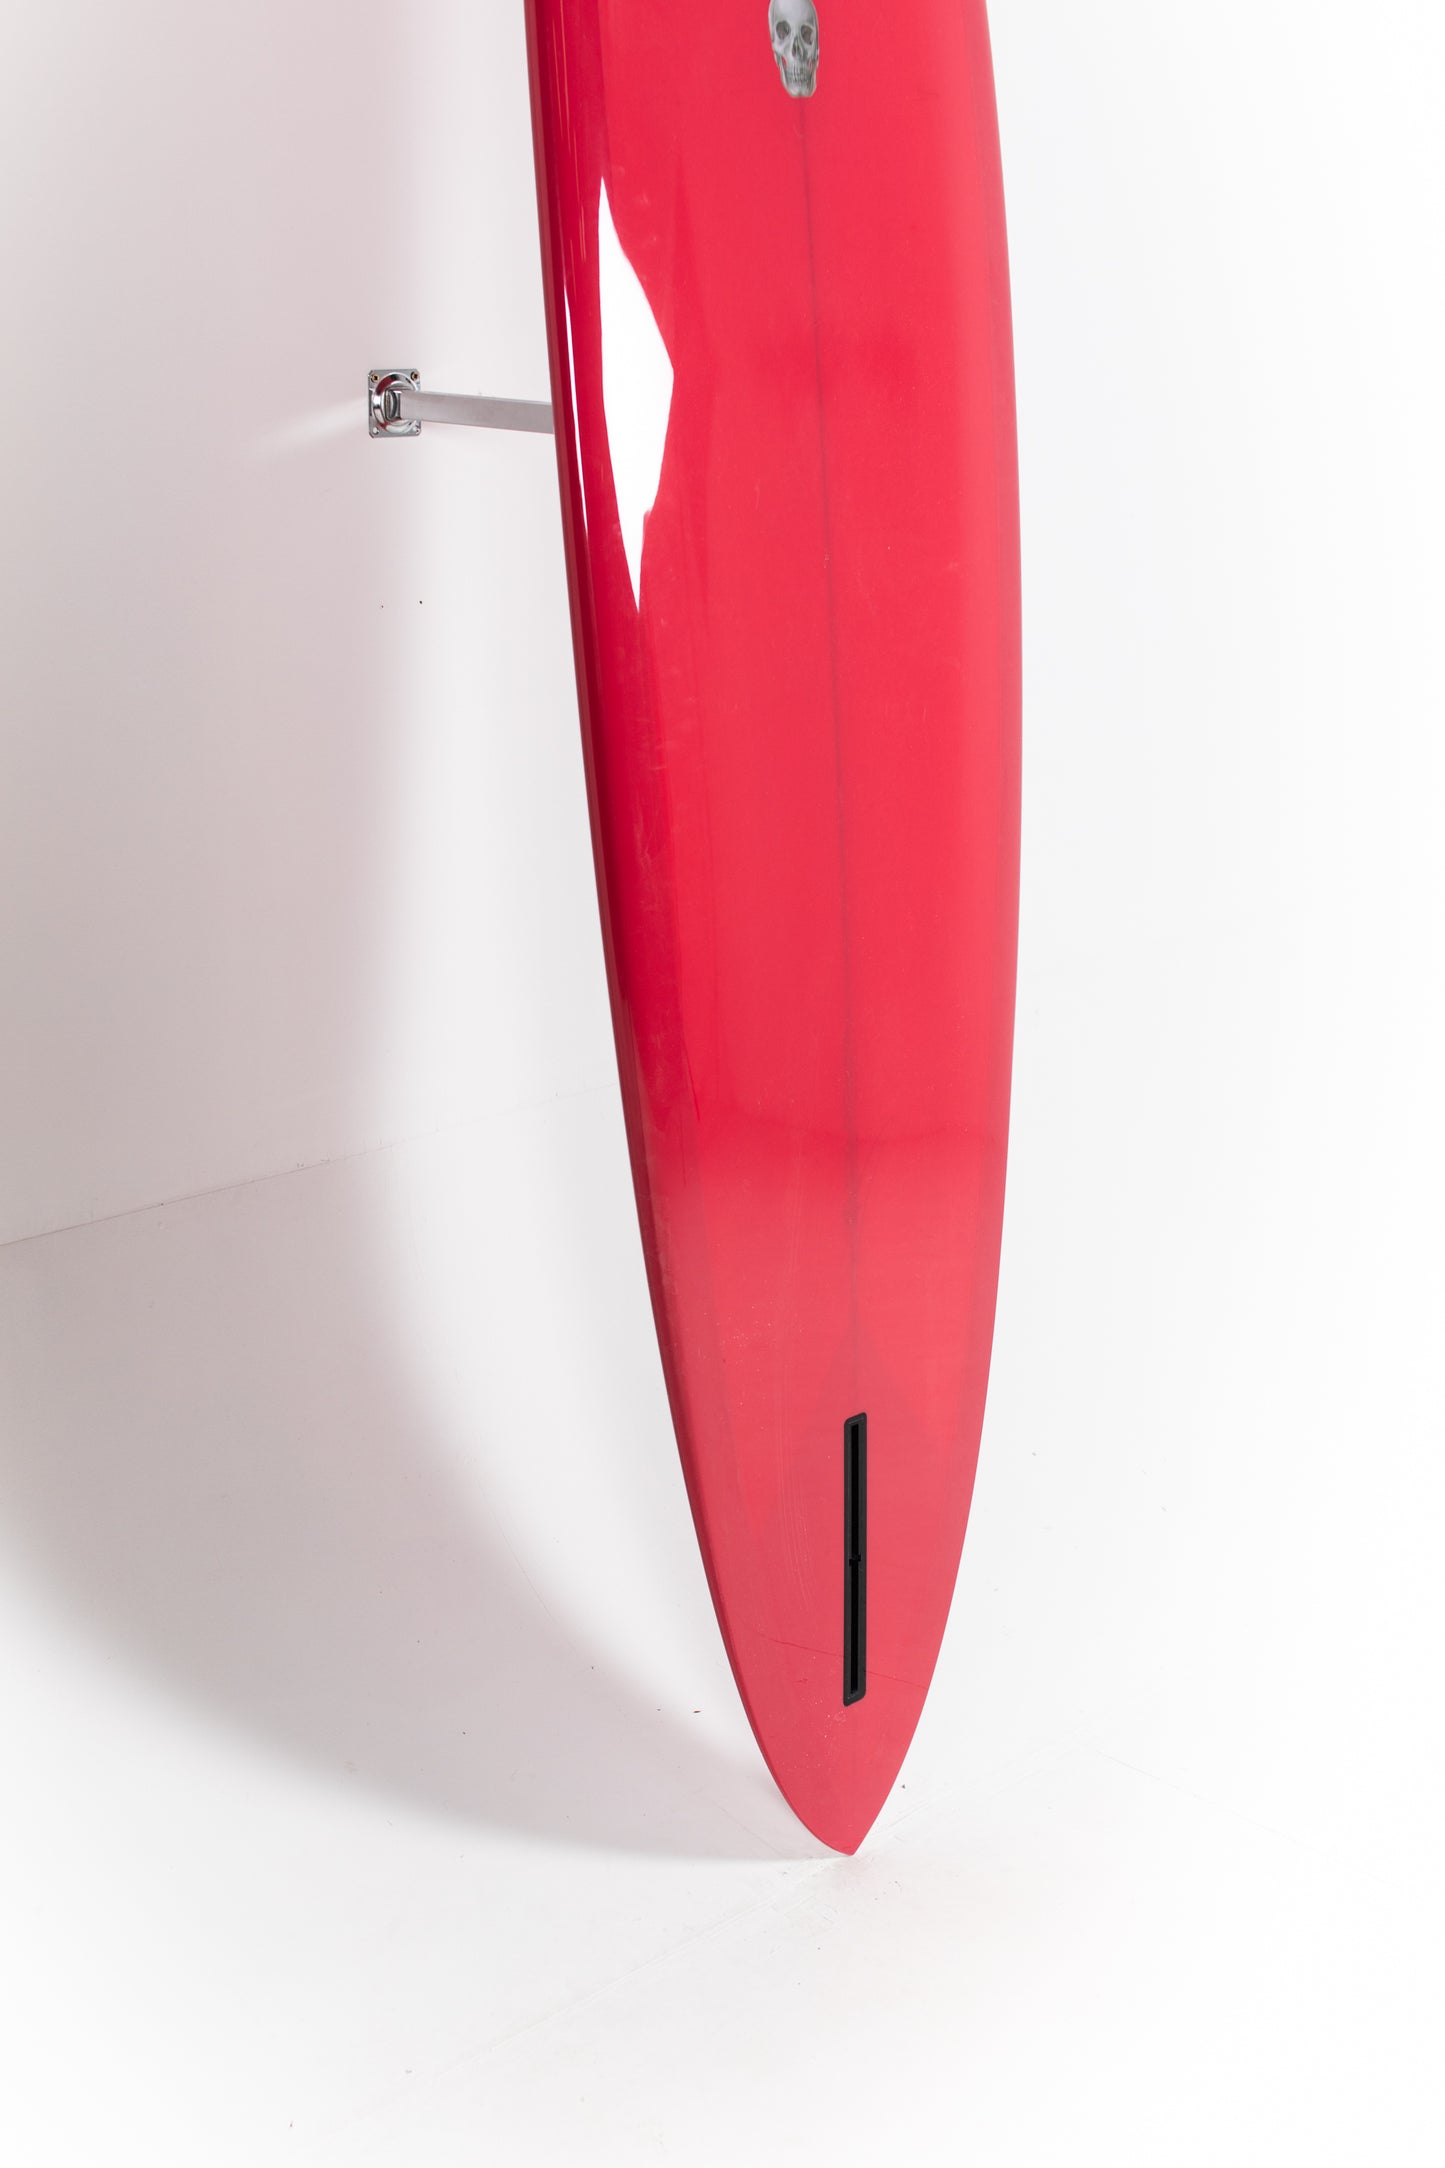 
                  
                    Pukas Surf Shop - Christenson Surfboards - C-BUCKET - 7'6" x 21 1/4 x 2 3/4 - CX05022
                  
                